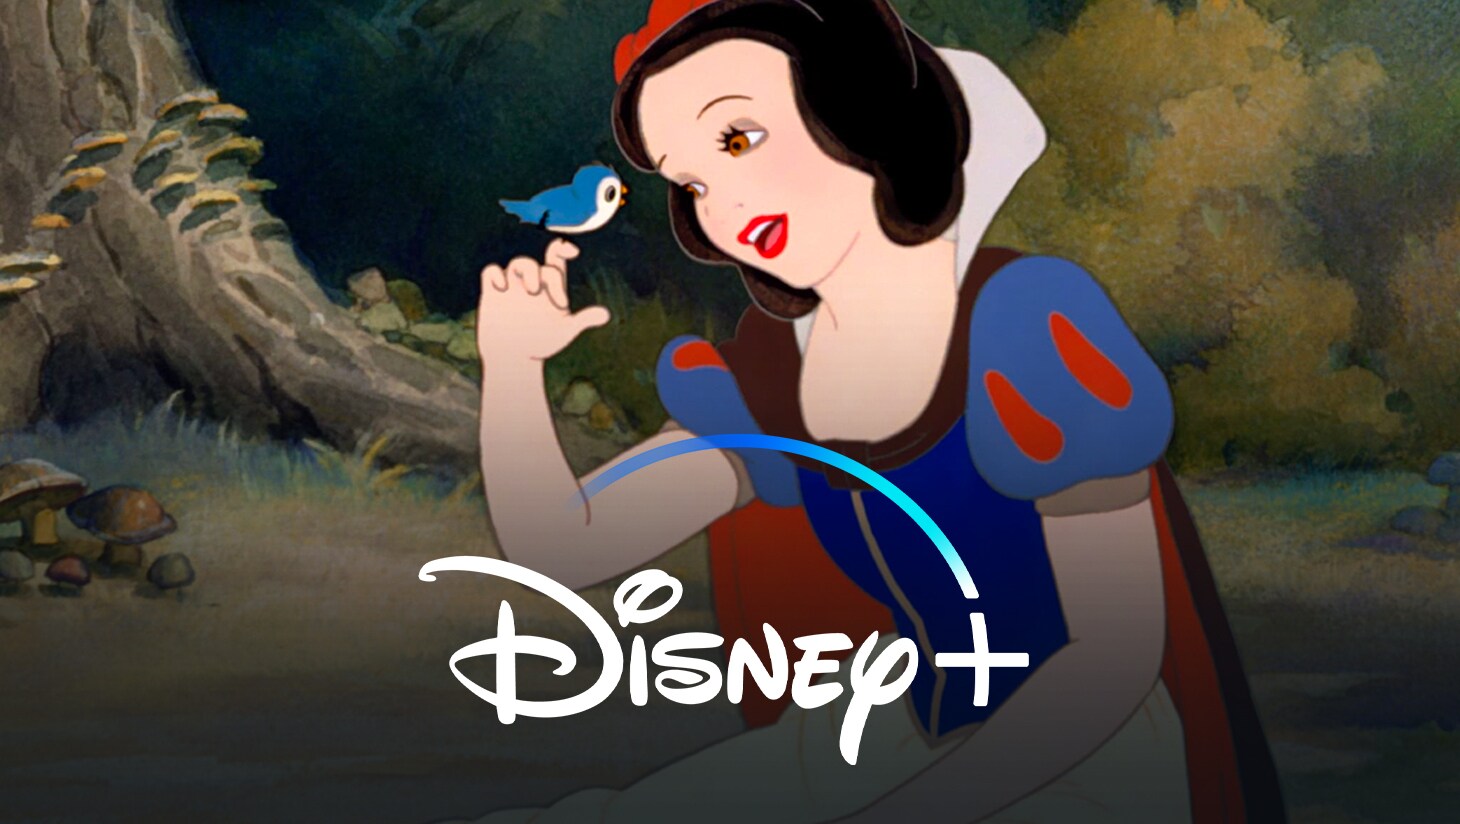 Snow White and the Seven Dwarfs - Disney+